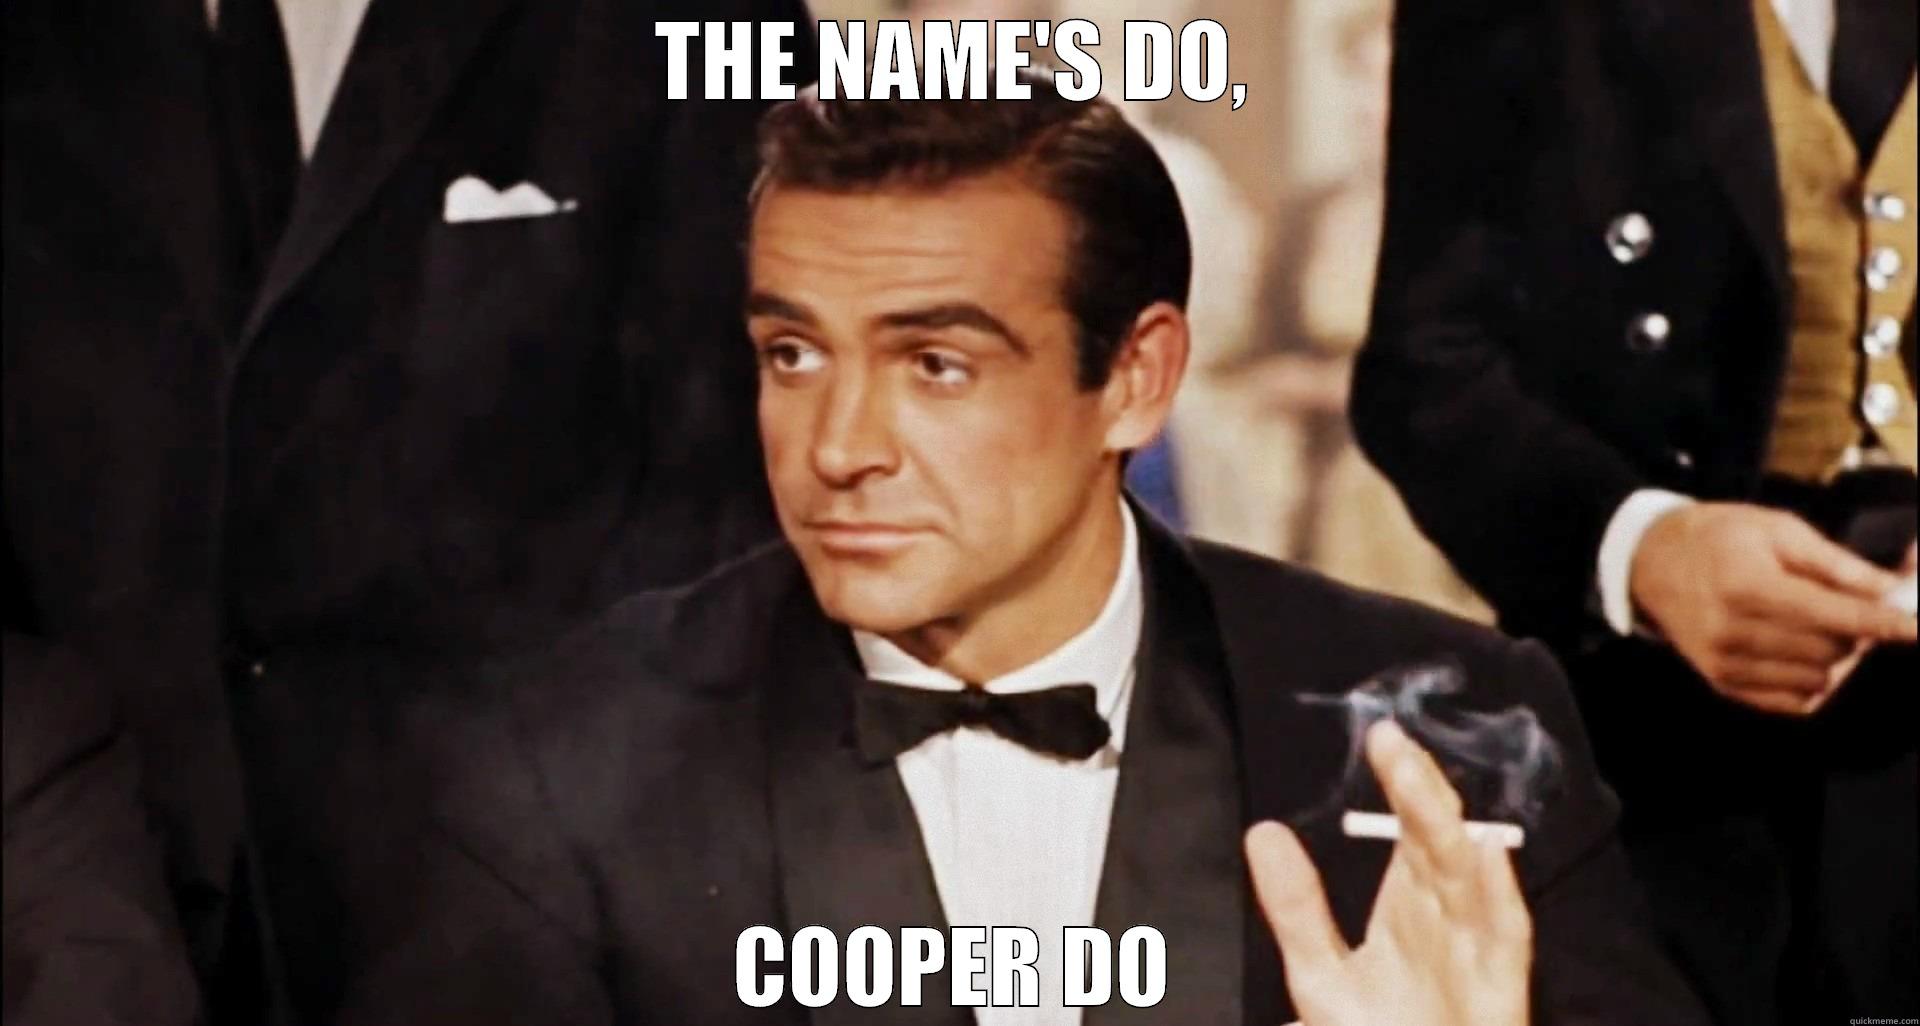 THE NAME'S DO, COOPER DO Misc